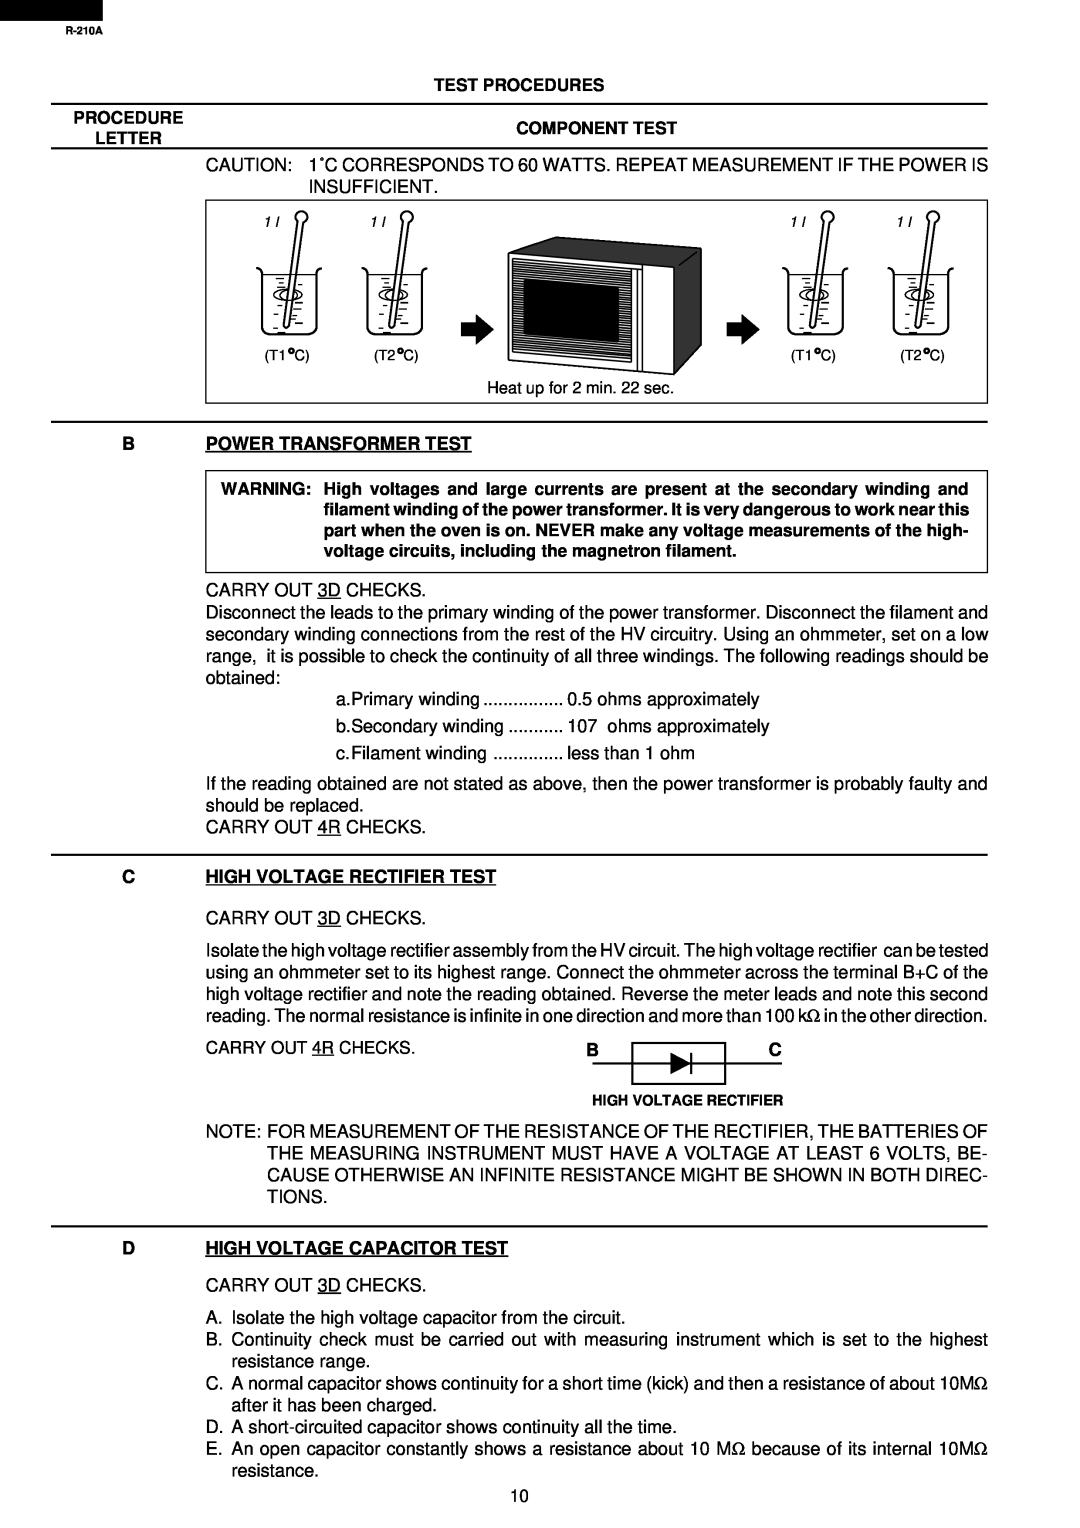 Sharp R-210A specifications Test Procedures Procedure, Letter, Component Test, Bpower Transformer Test 